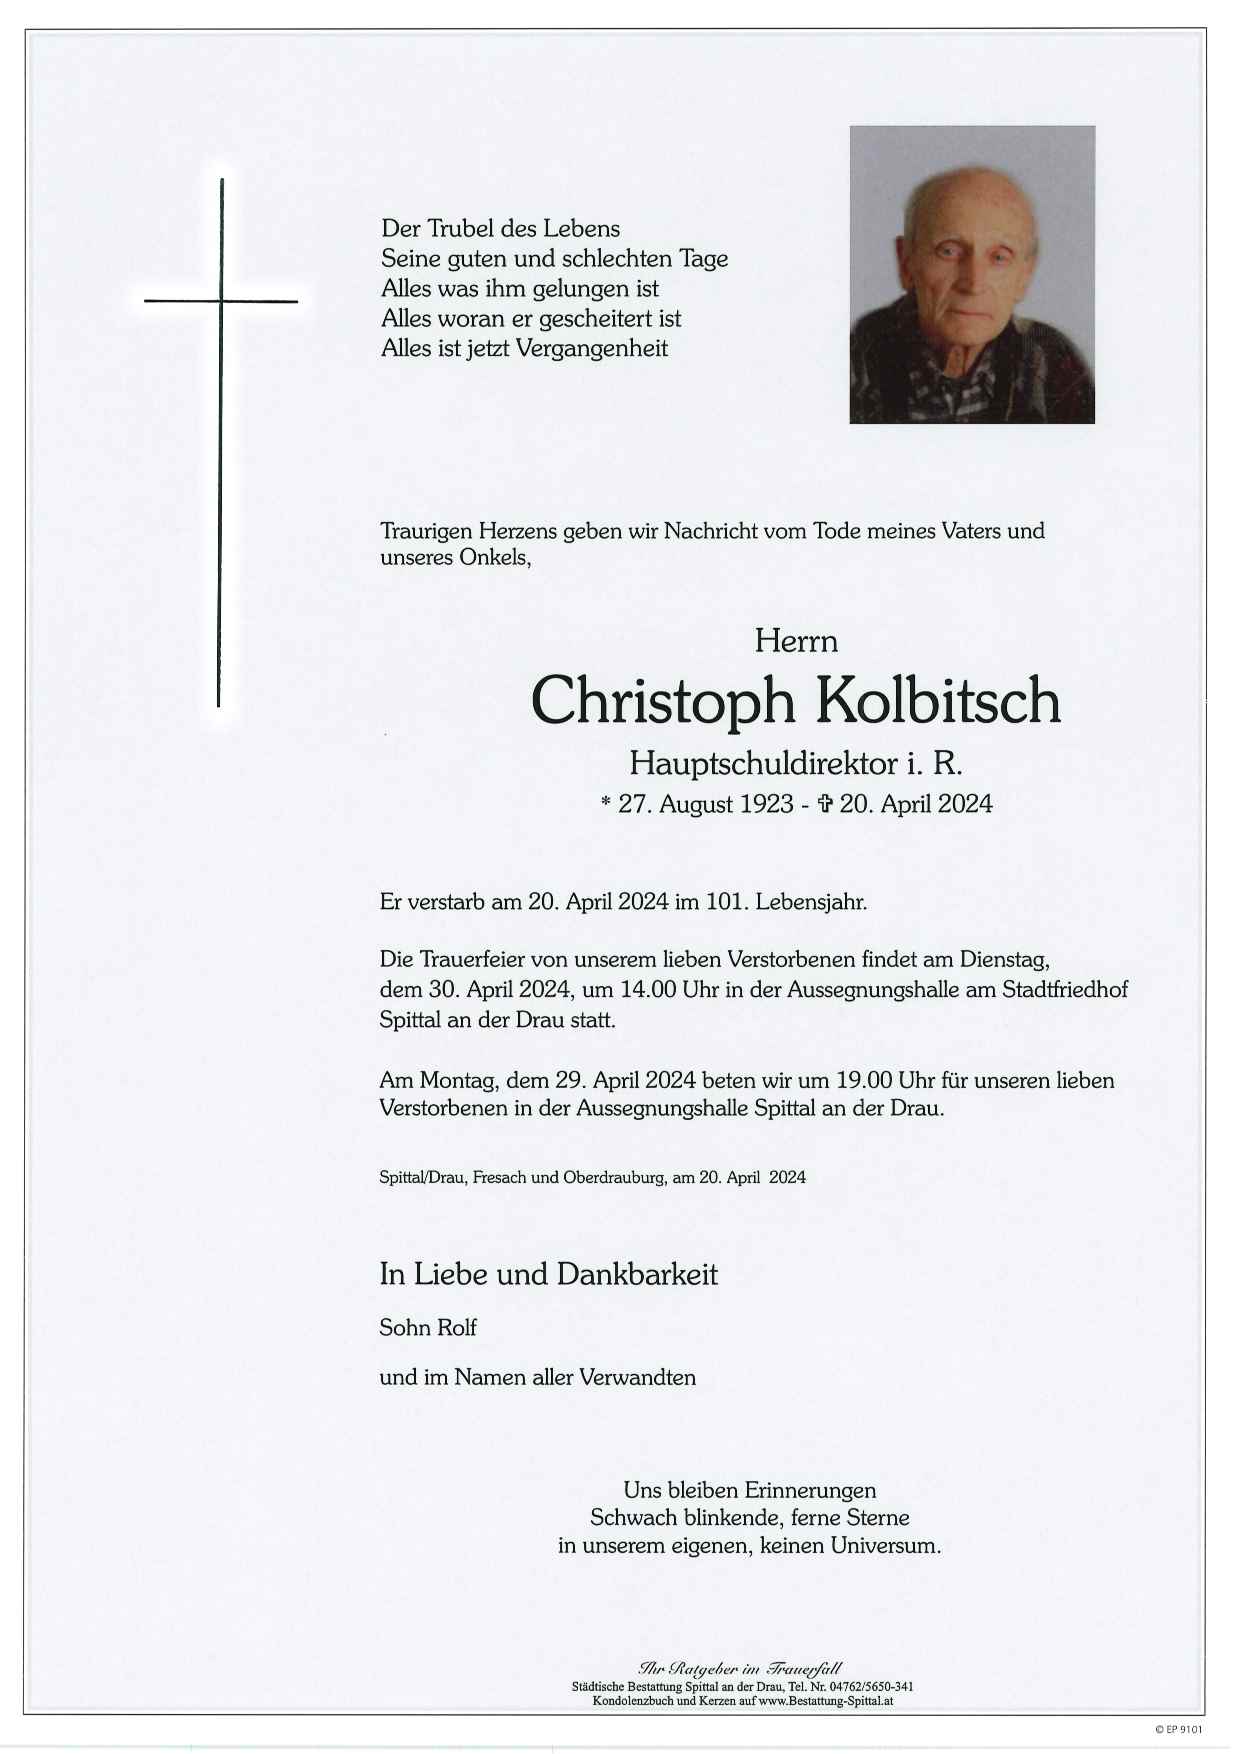 Christoph Kolbitsch